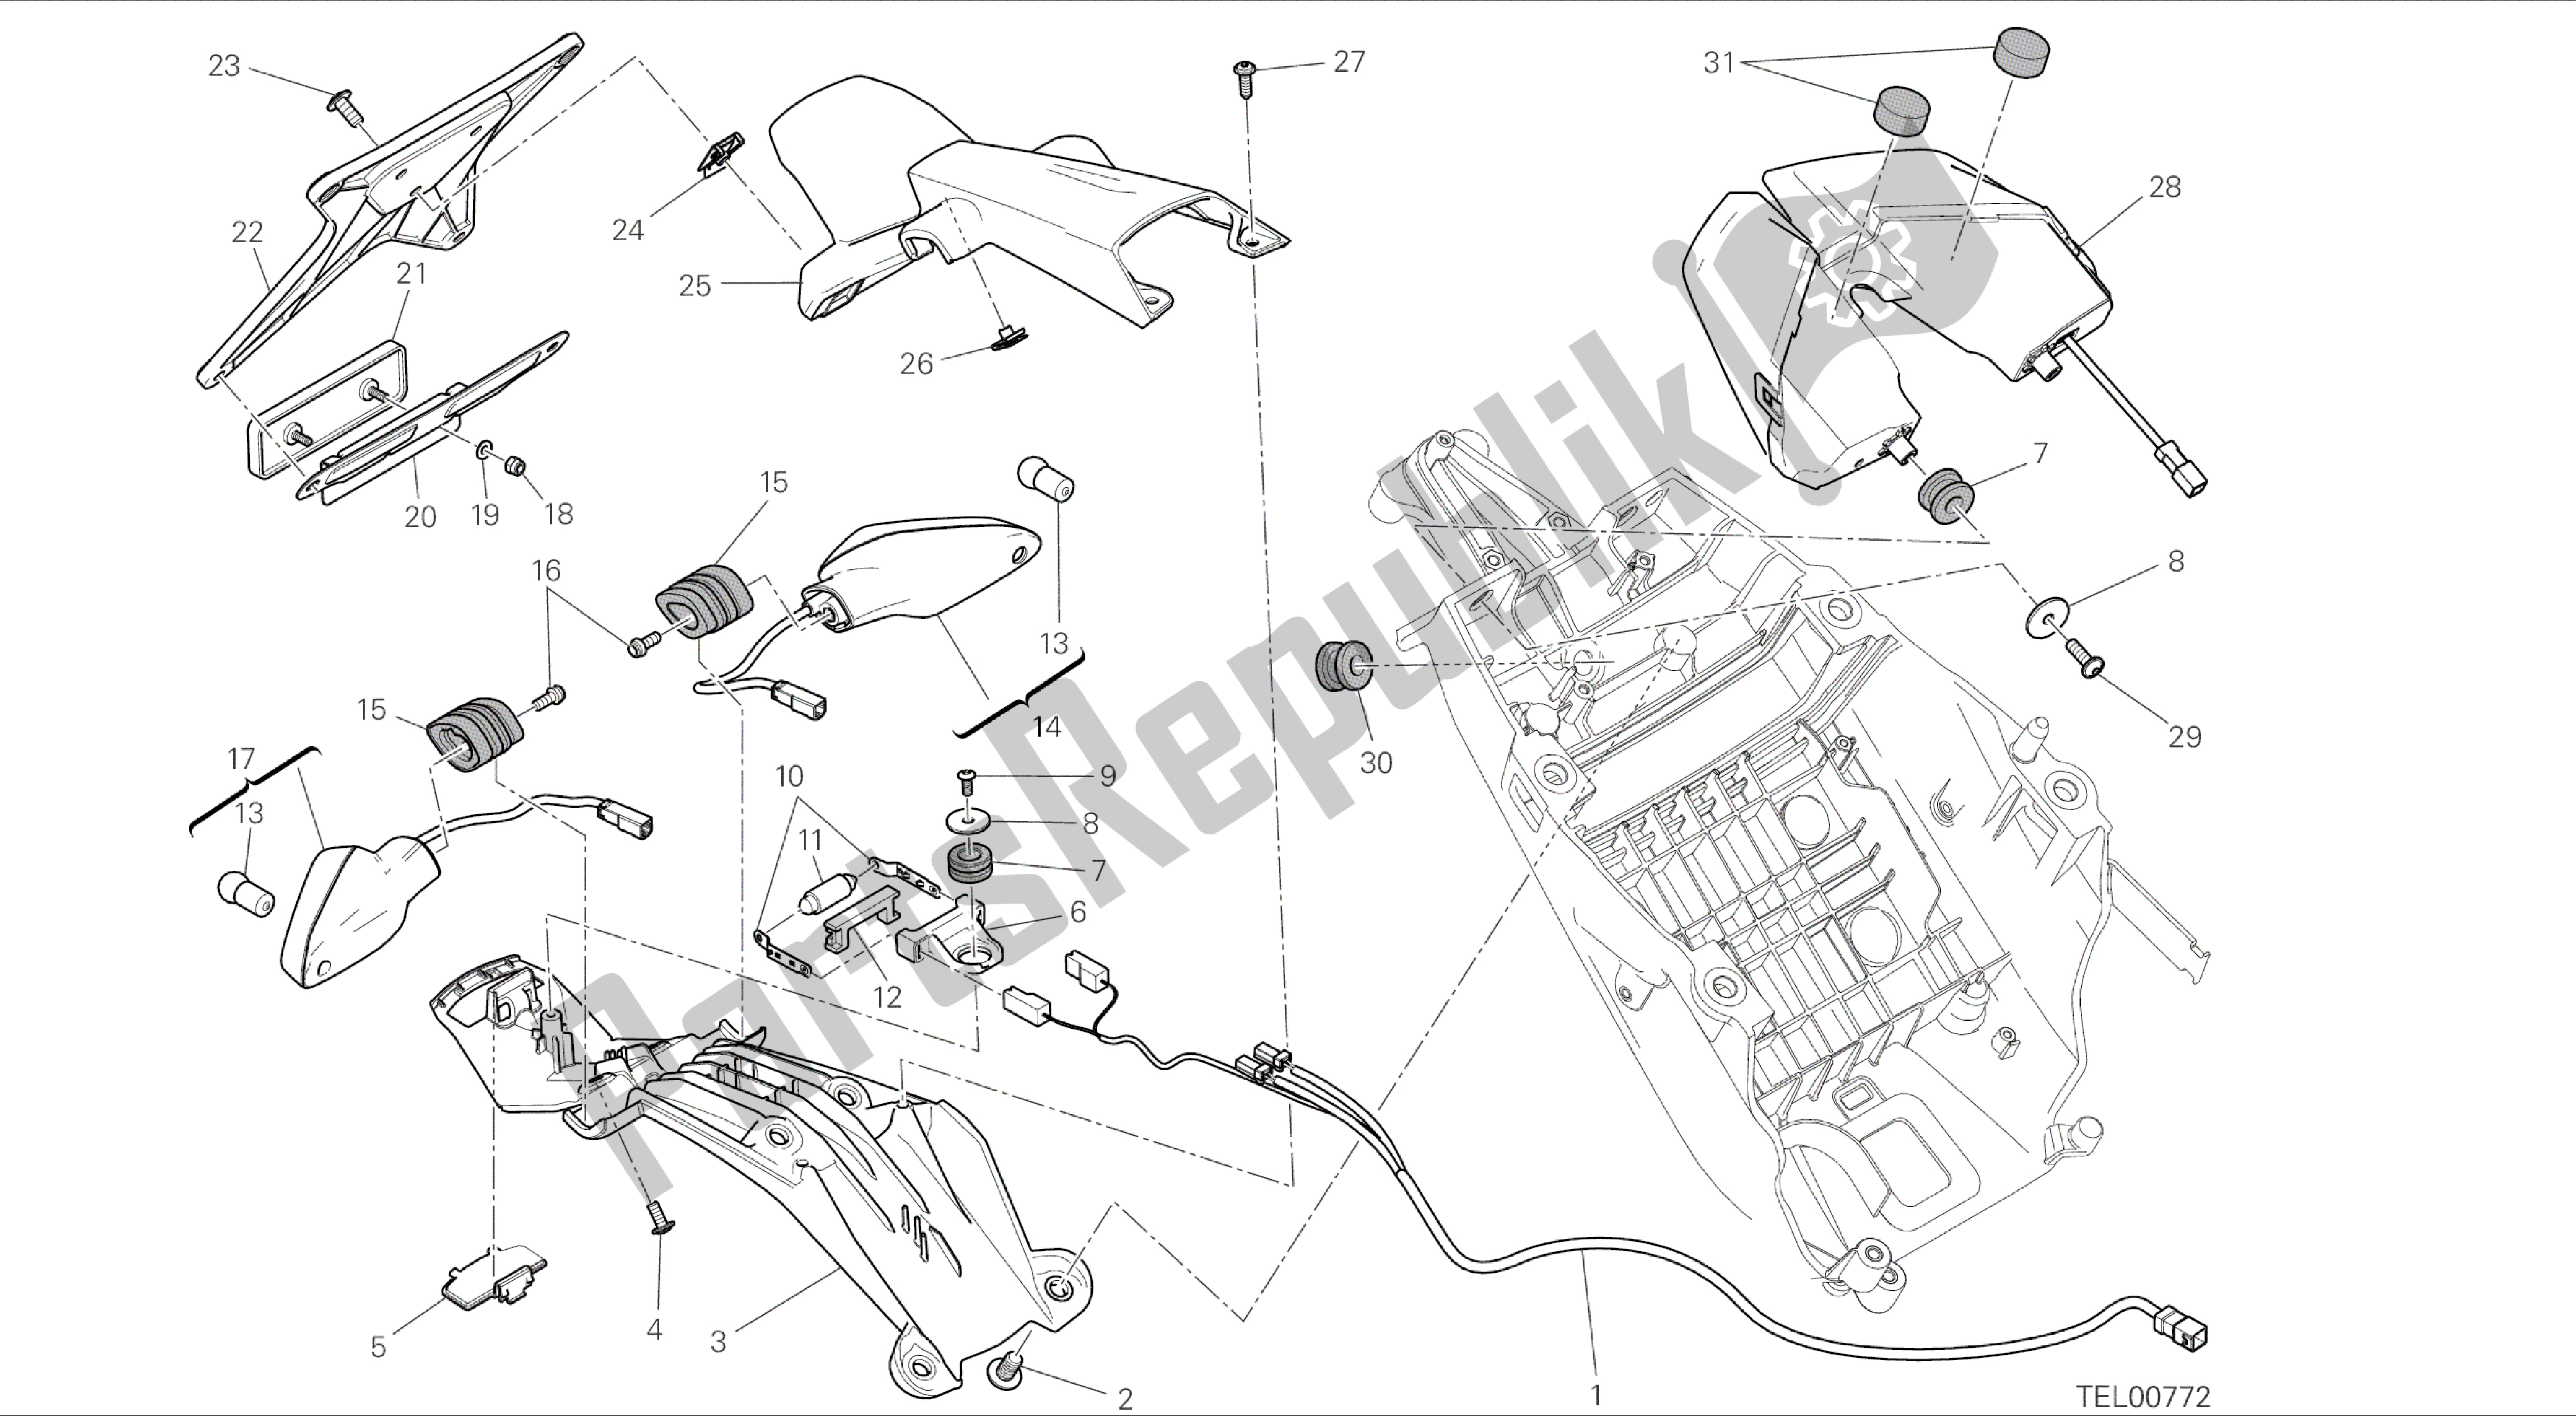 Alle onderdelen voor de Tekening 27b - Kentekenplaathouder - Achterlicht [mod: Hym; Xst: Chn, Eur, Fra, Jap, Tha, Twn] Groep Elektrisch van de Ducati Hypermotard 821 2014